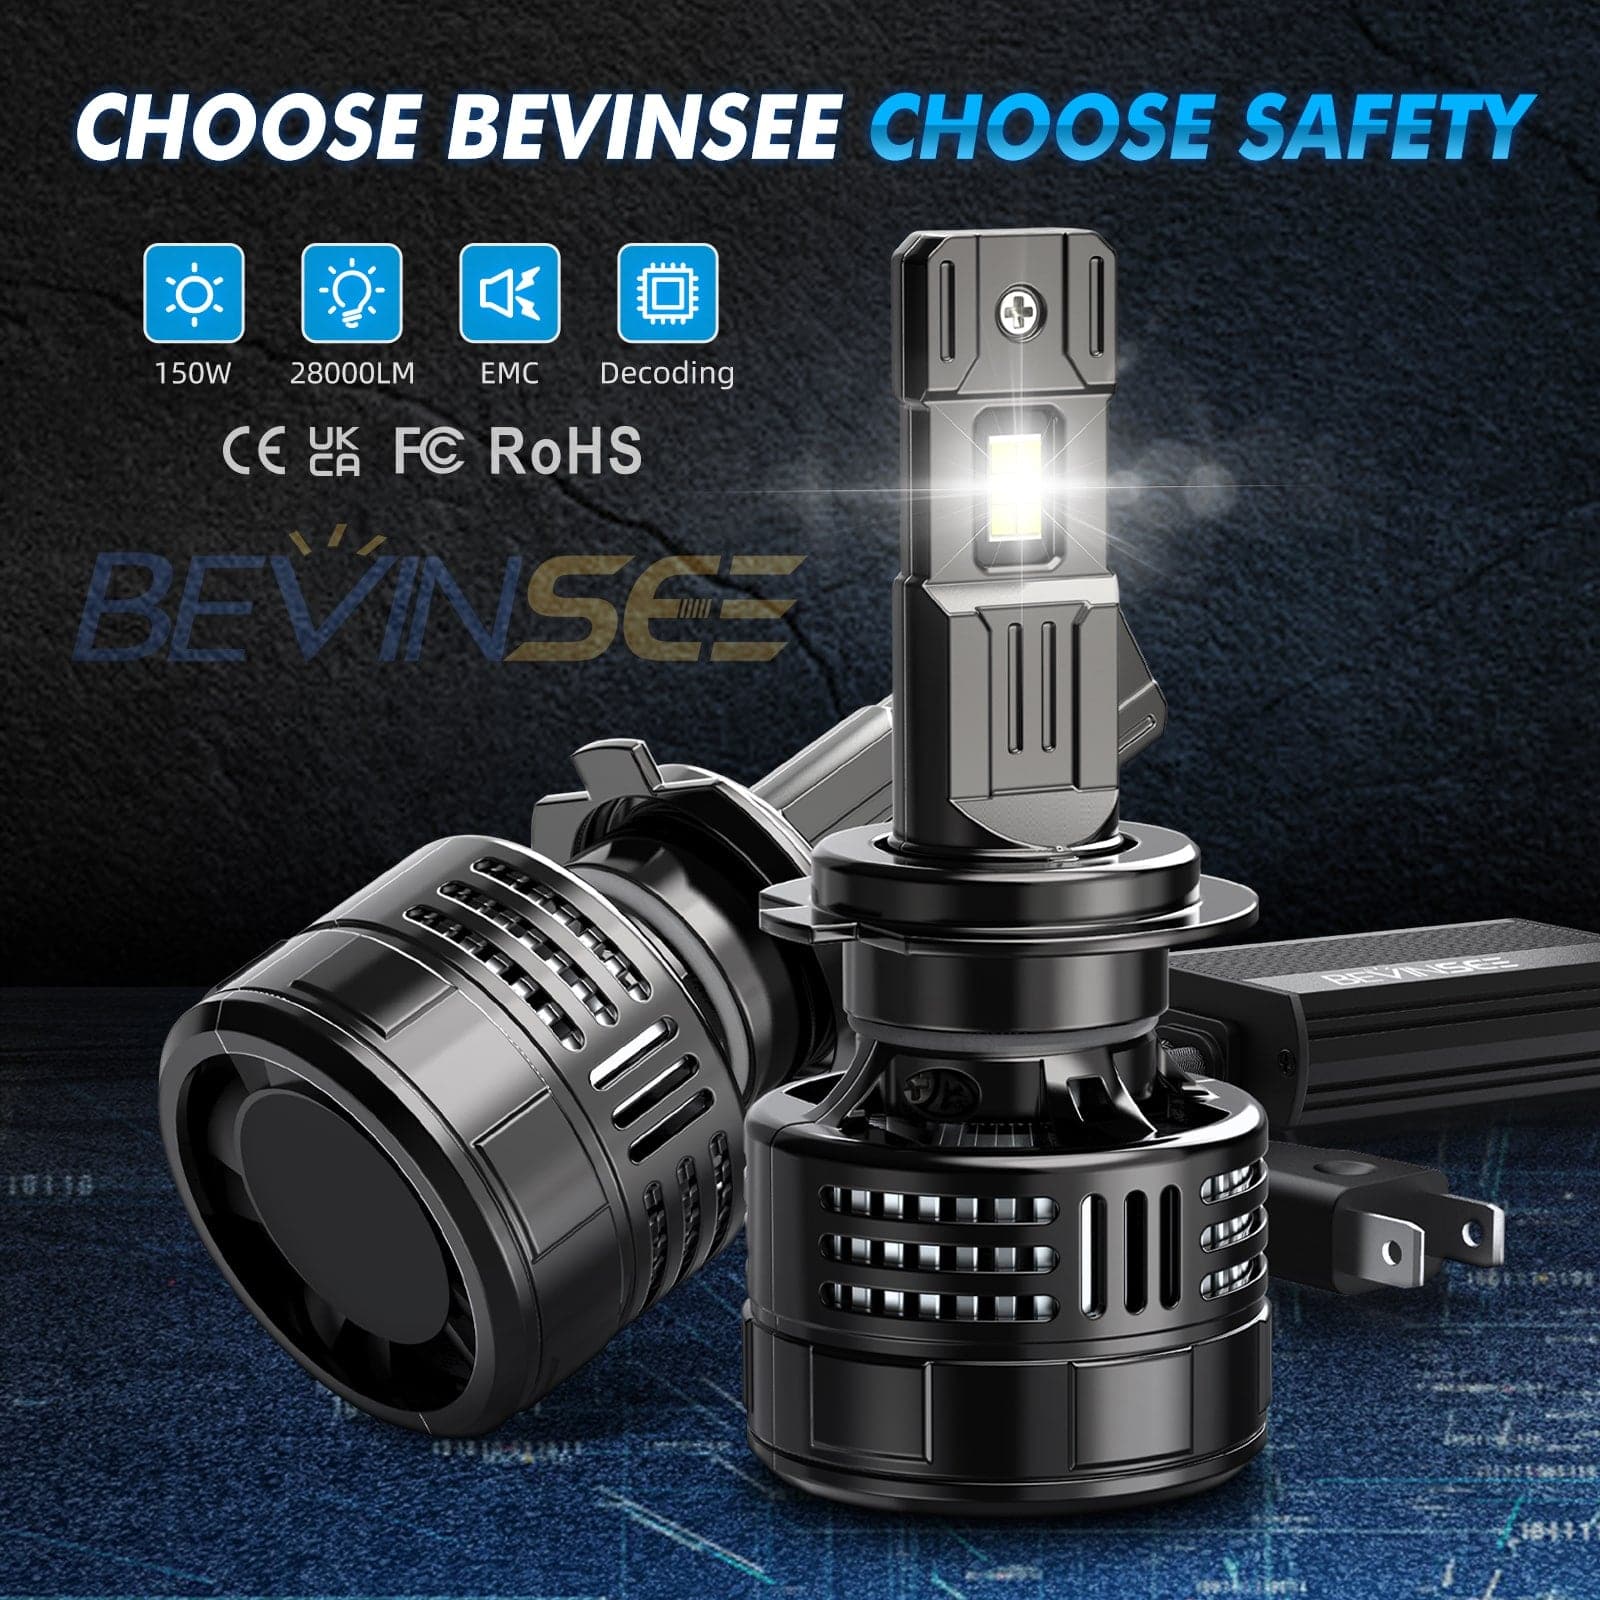 BEVINSEE V55 Upgrade H7 LED Headlight Bulb 150W/Pair 700% Bighter than Halogen